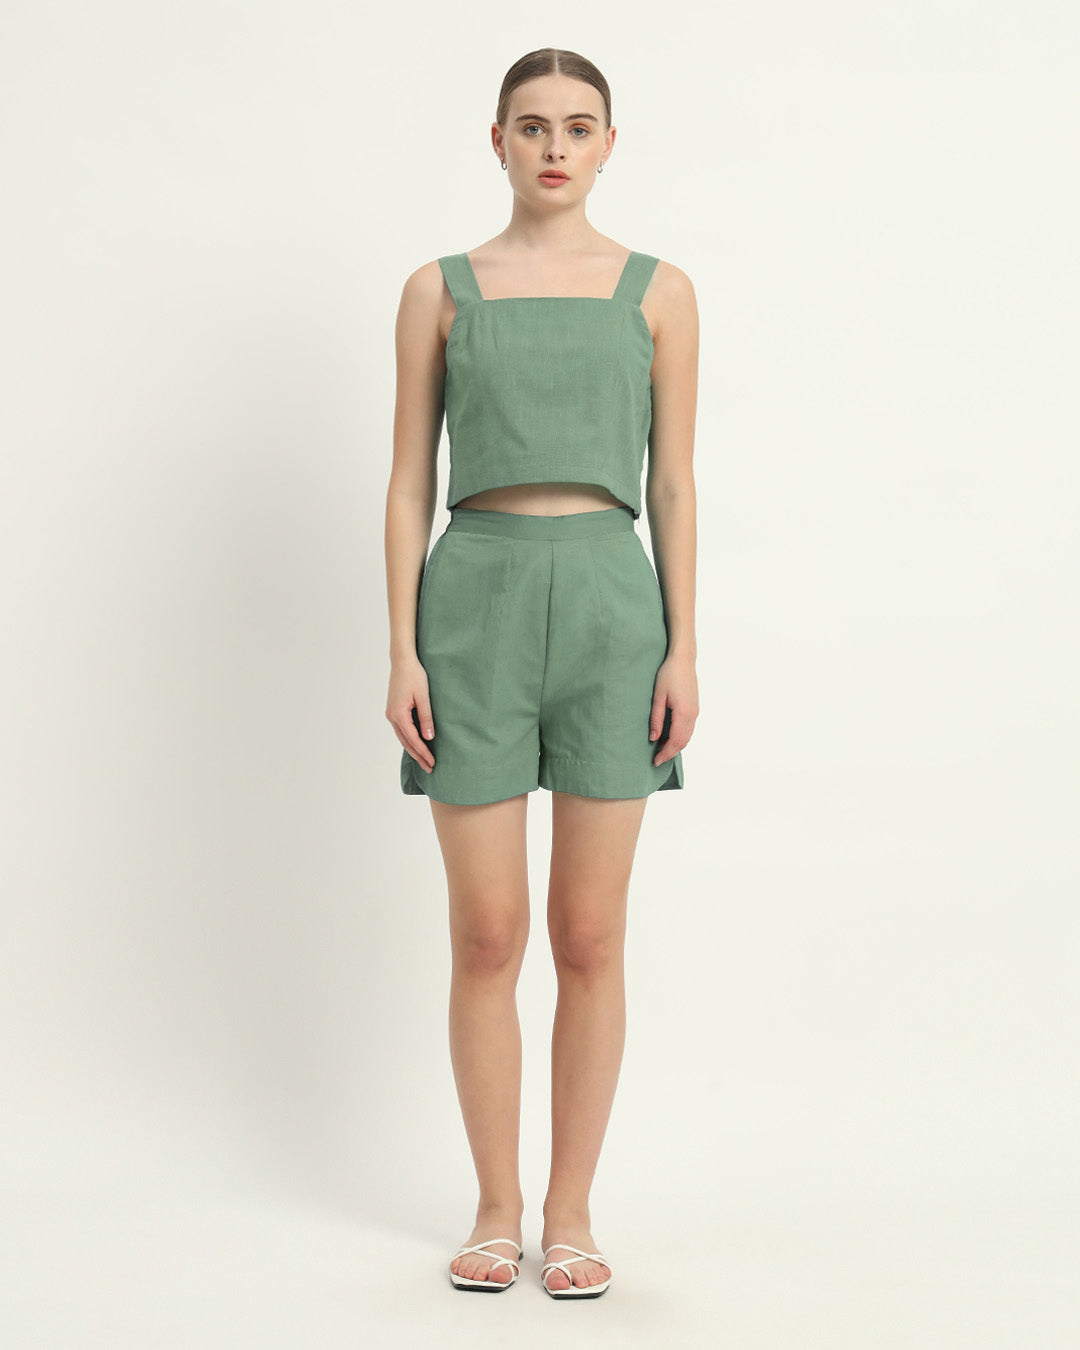 Shorts Matching Set Mint Sleek Square Crop